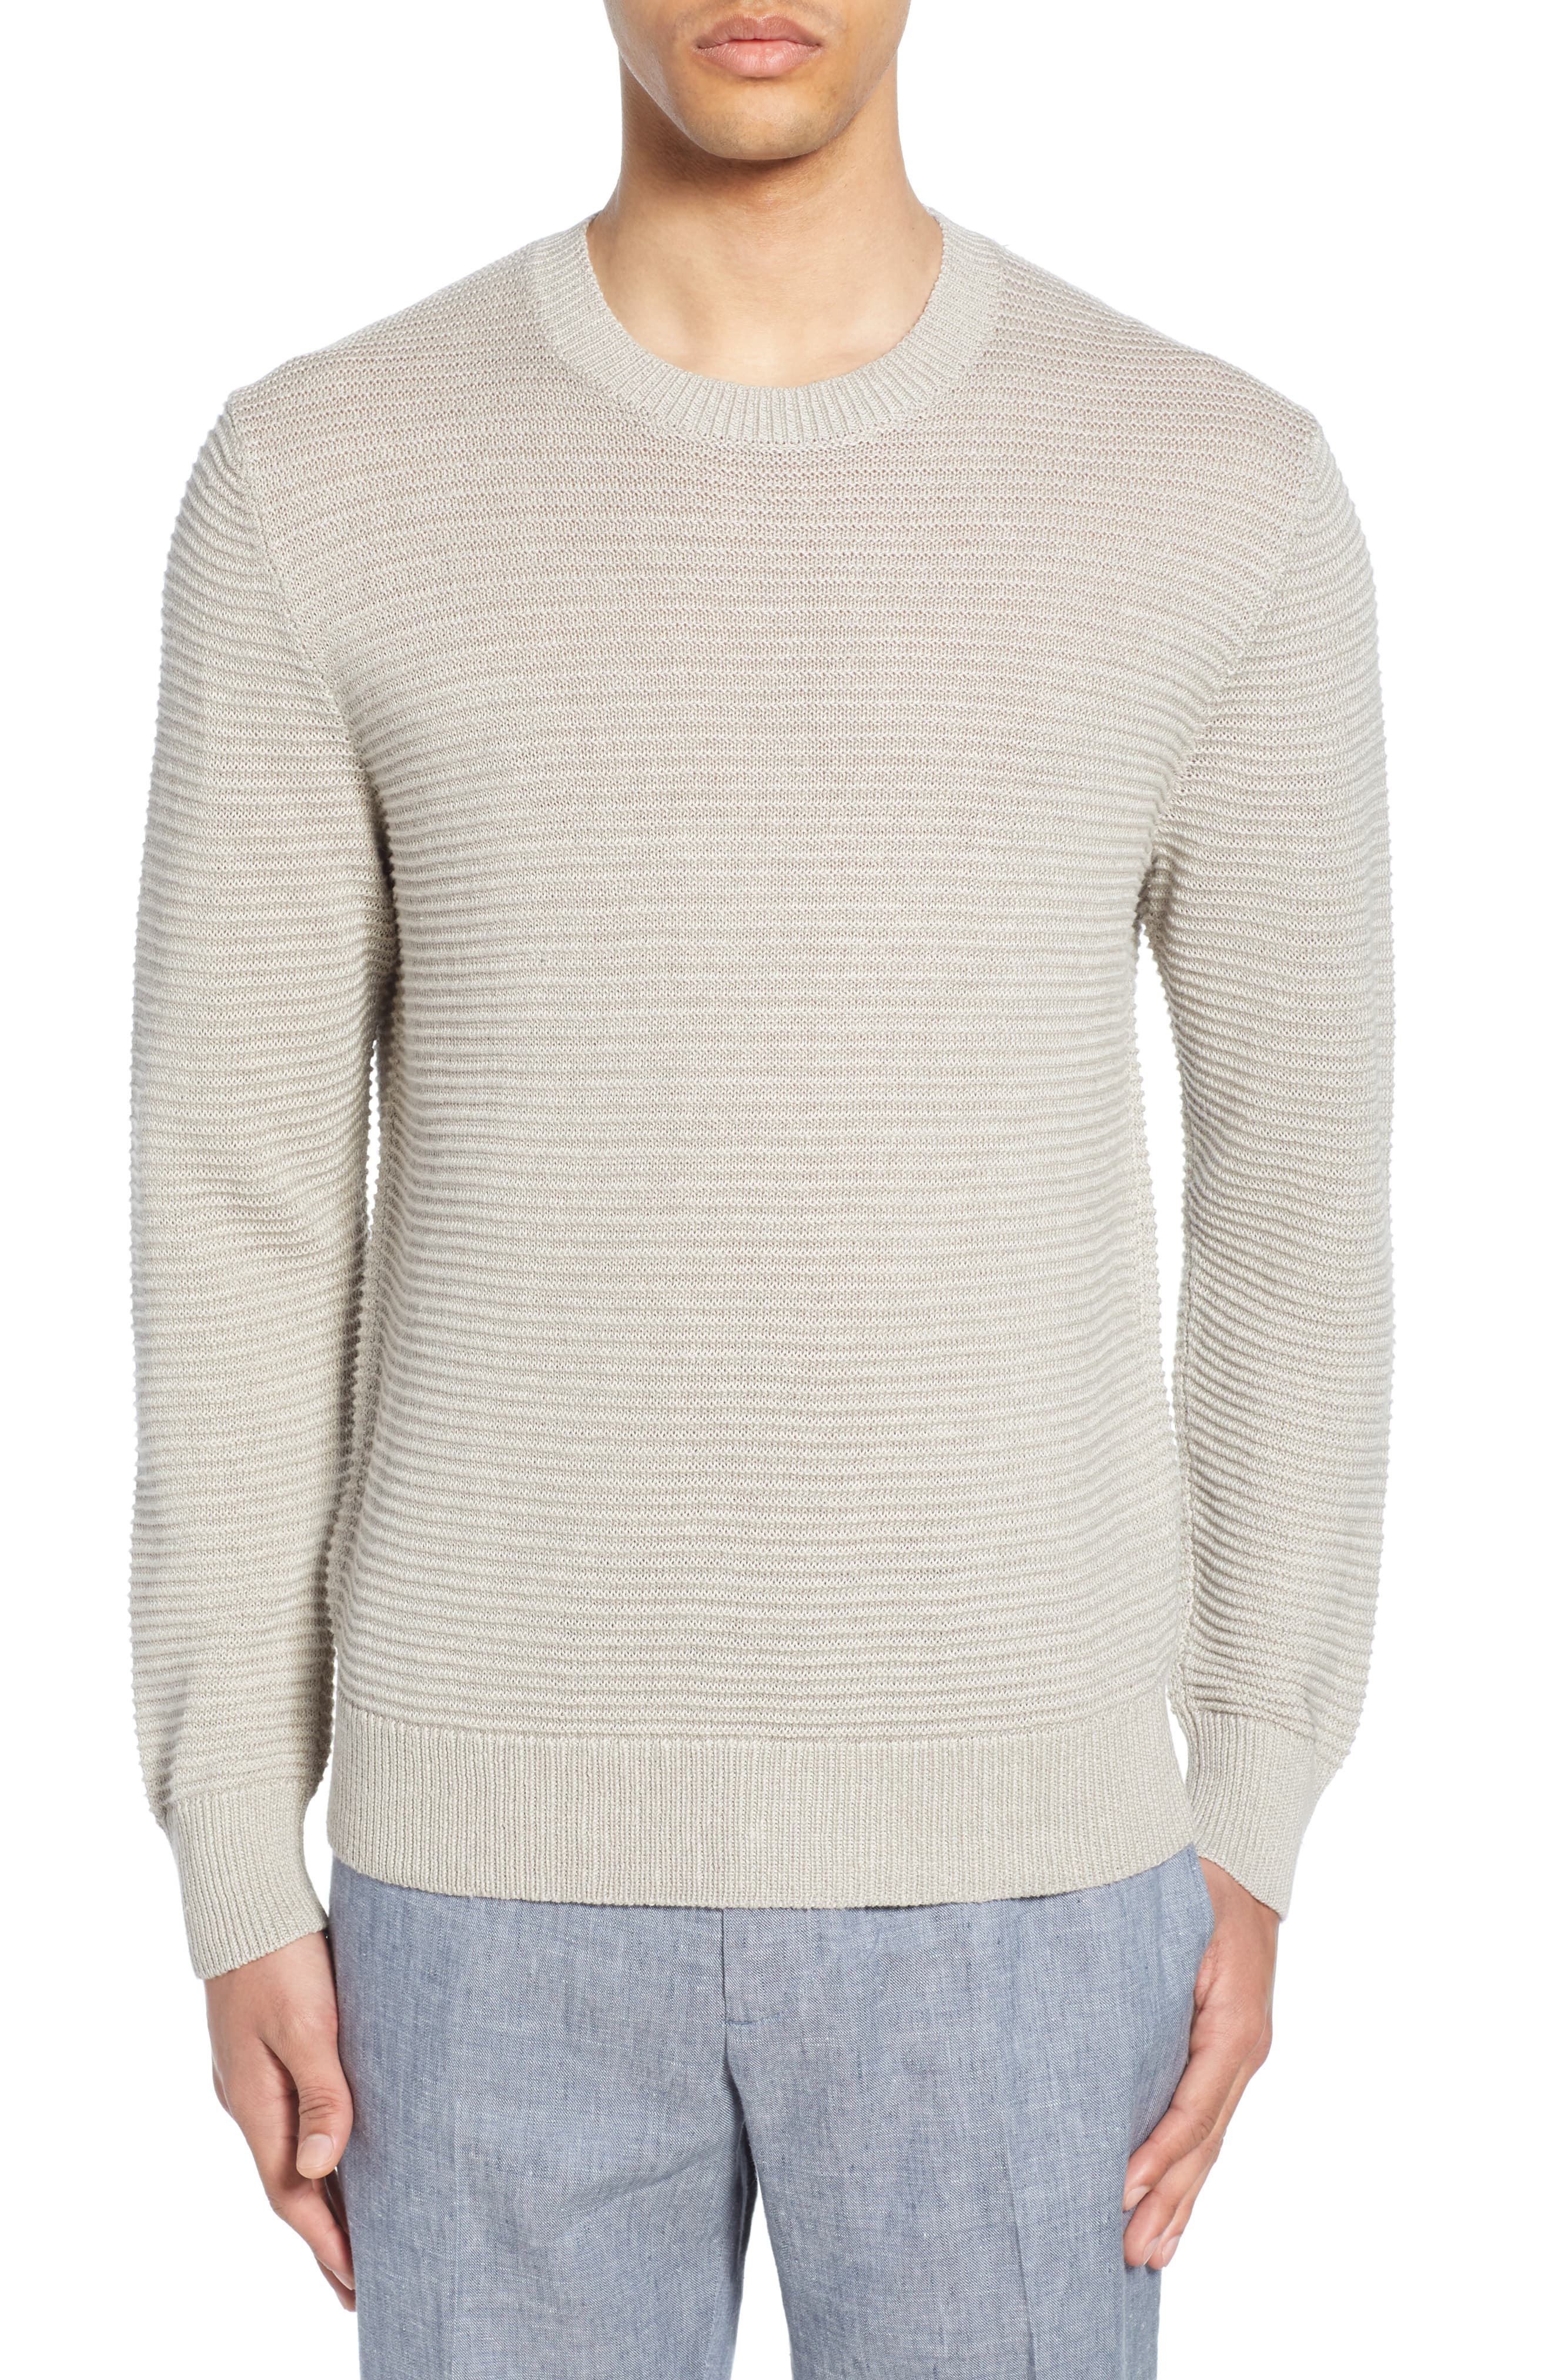 Men’s Club Monaco Links Linen Blend Sweater, Size Medium – Beige | The ...